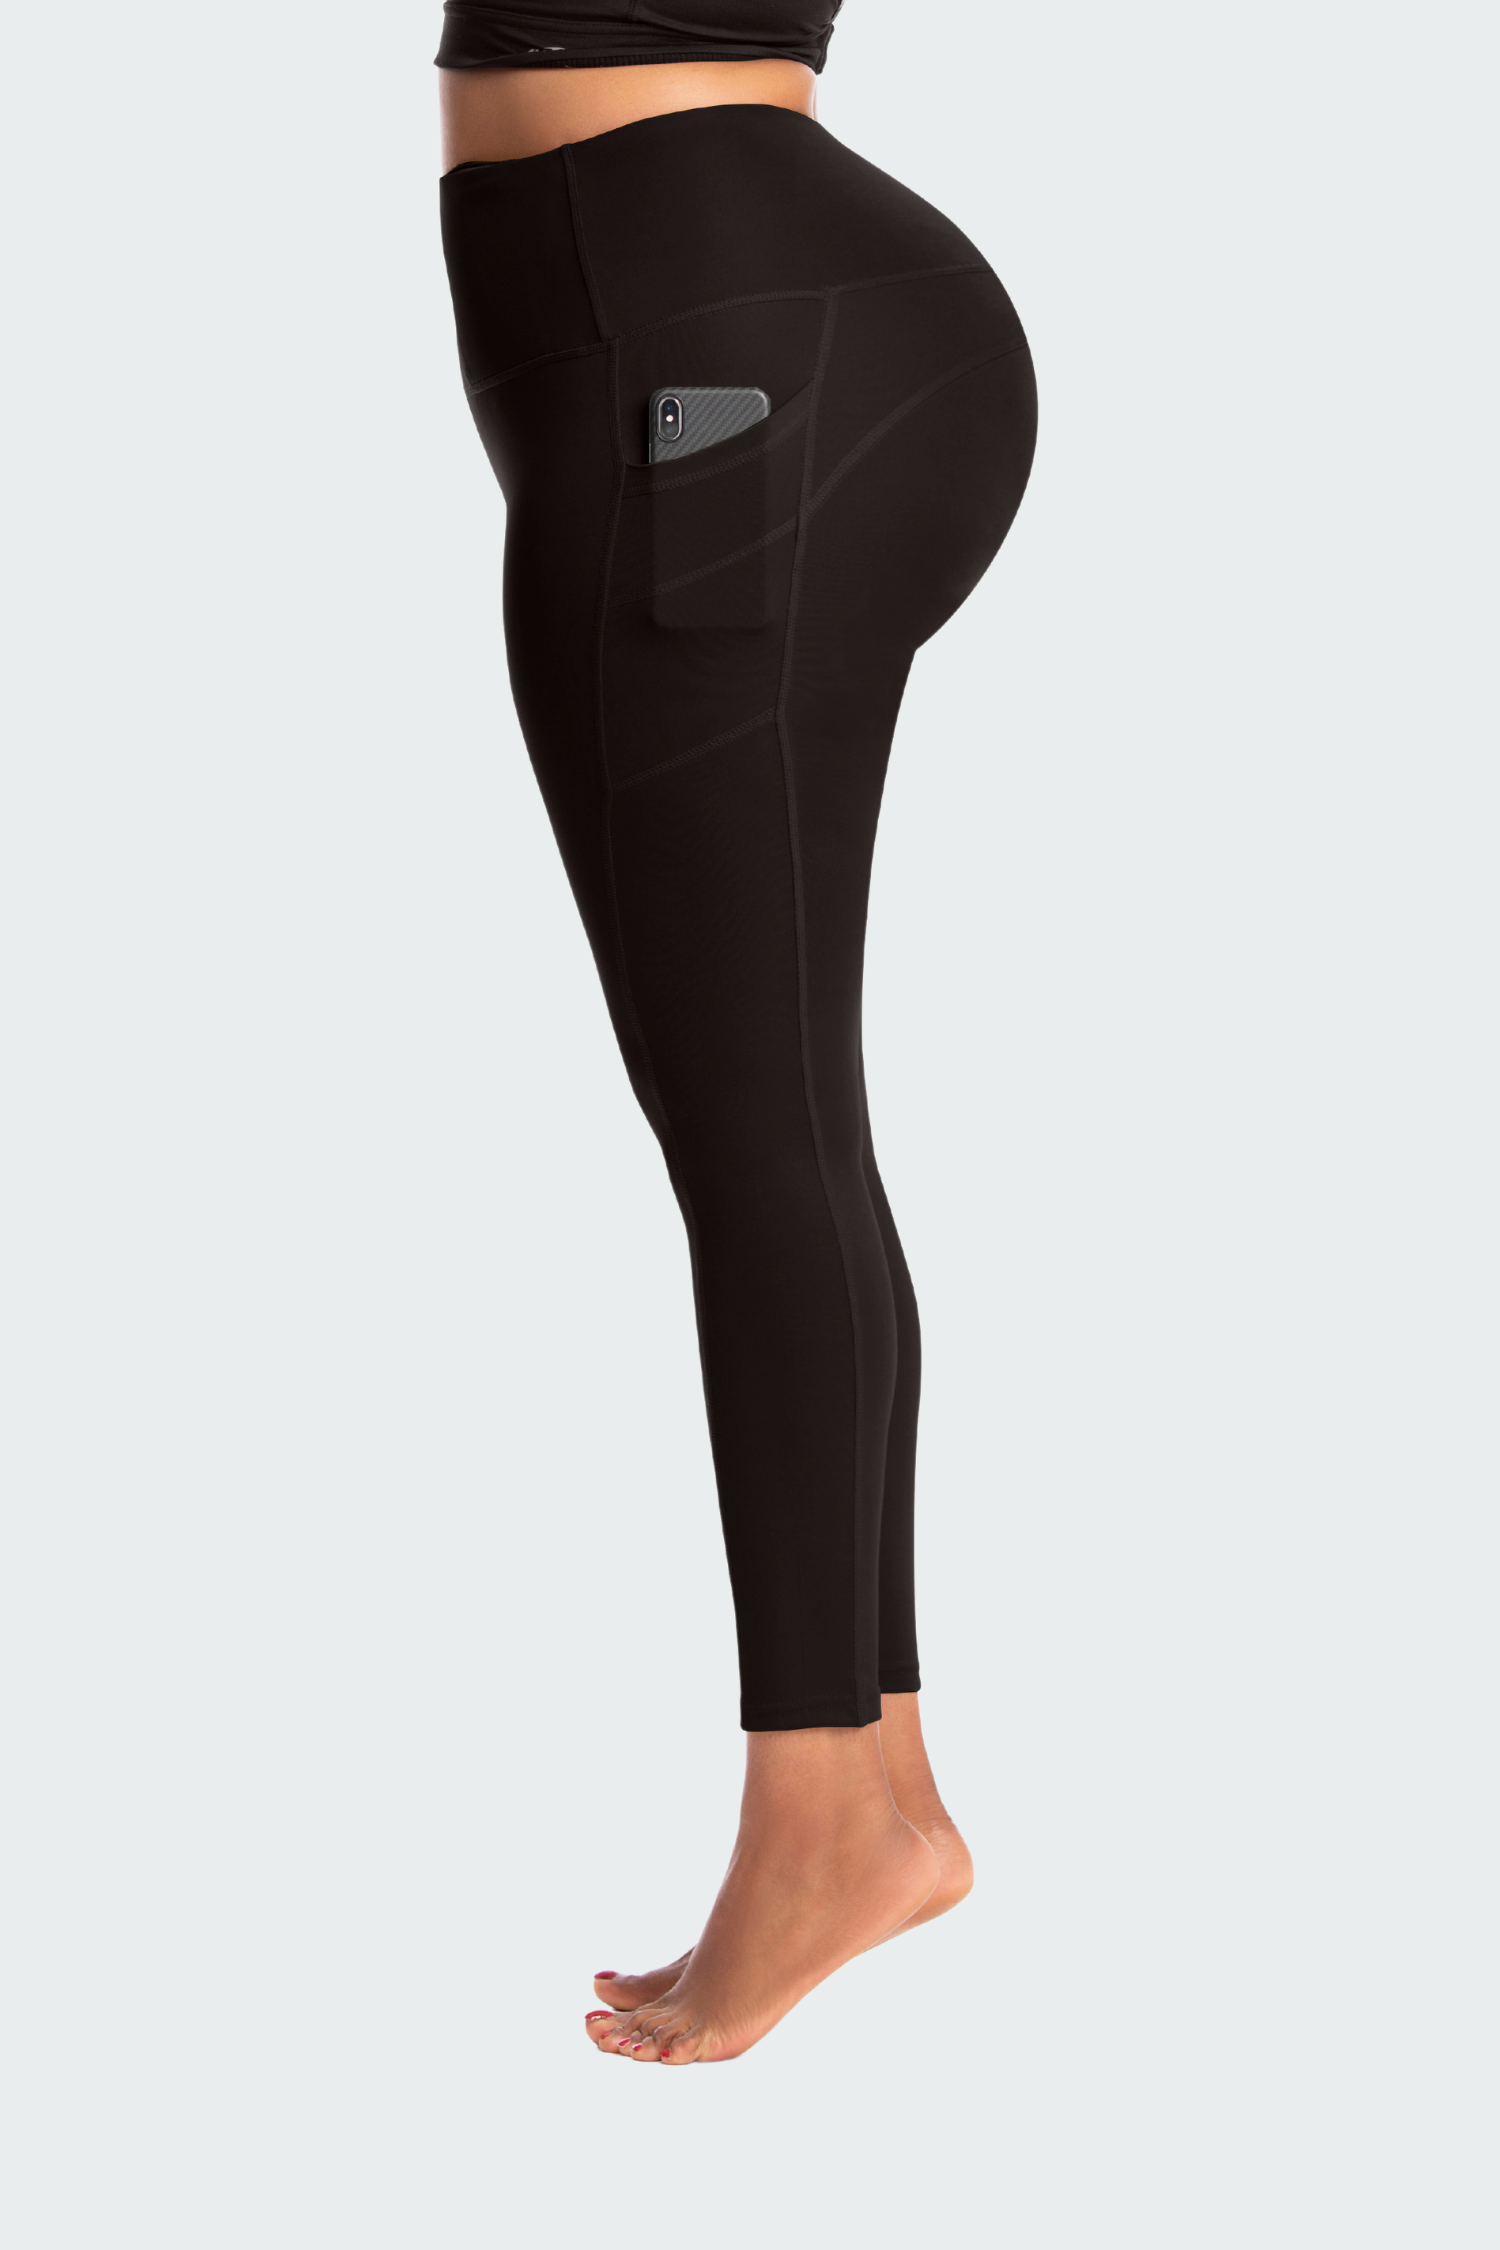 BSP Women's Full Length Legging with Jersey Pocket- Plus Size